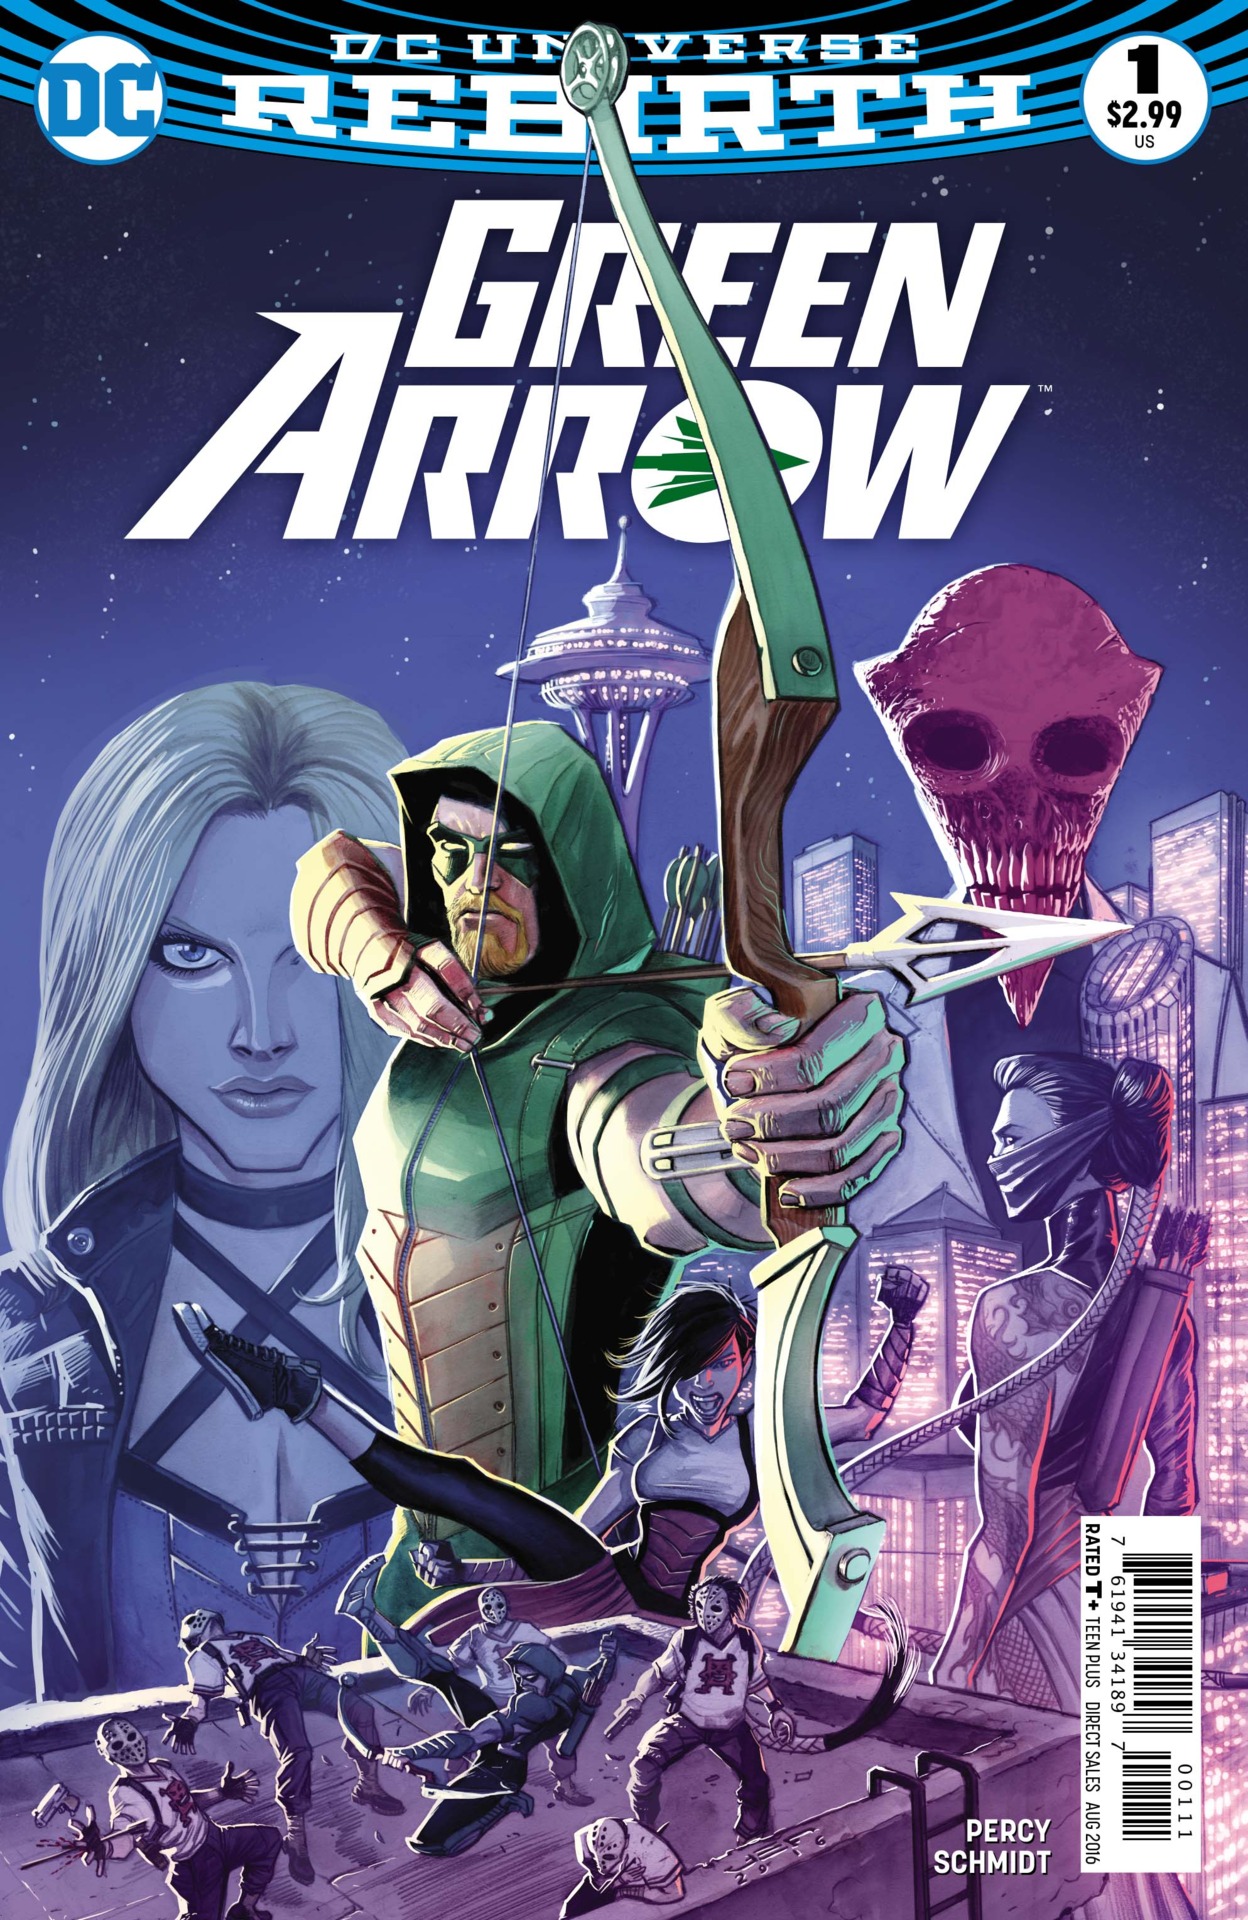 Green Arrow #1 Review